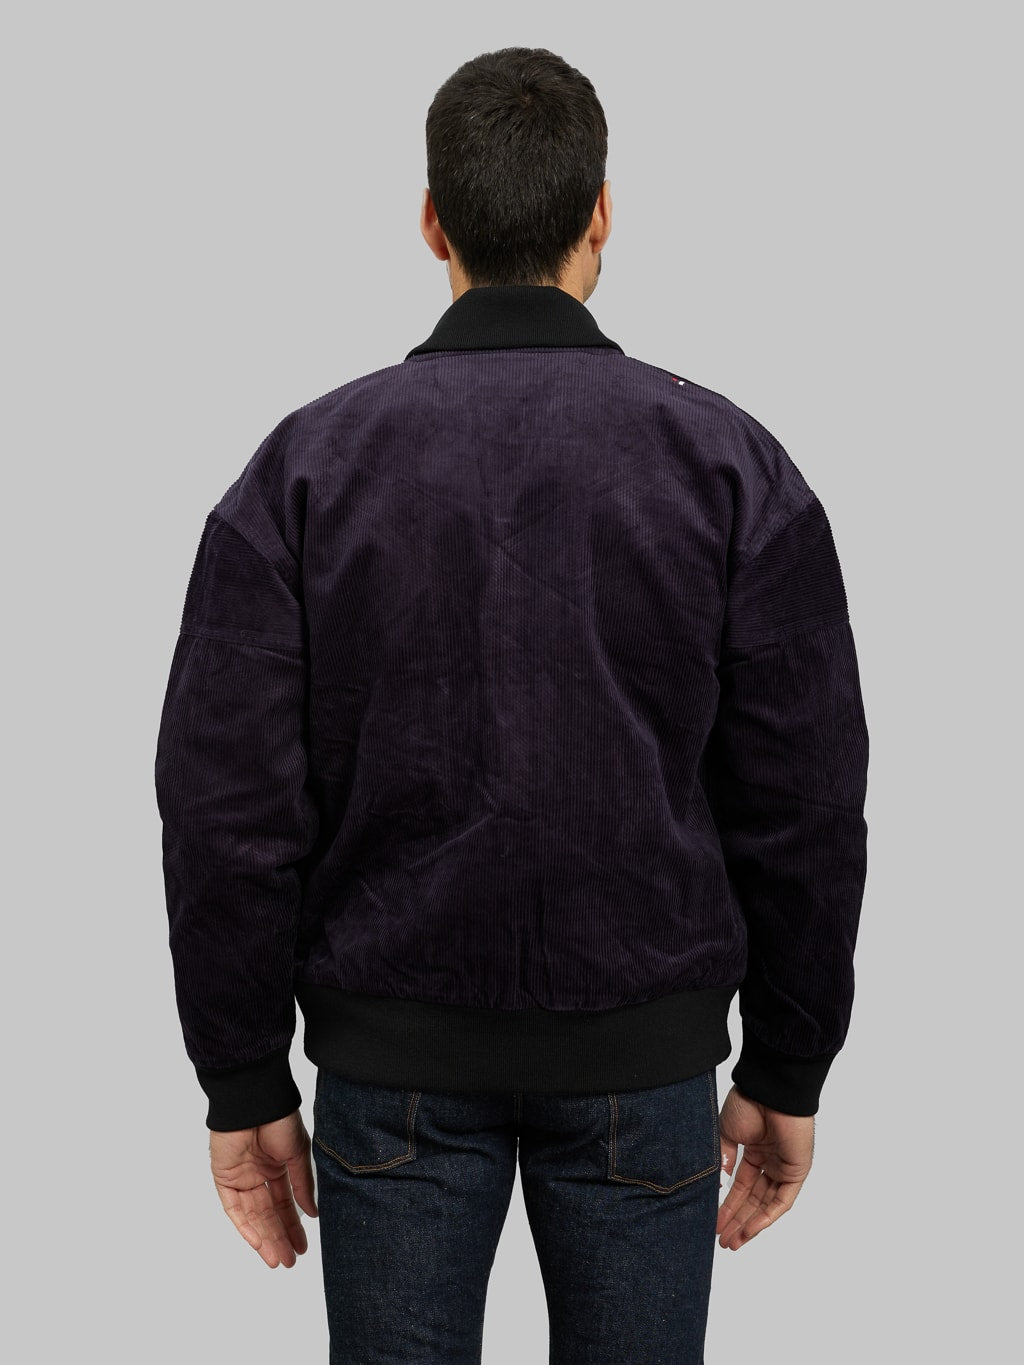 Tanuki Sazanami Corduroy natural indigo dyed Jacket model back fit